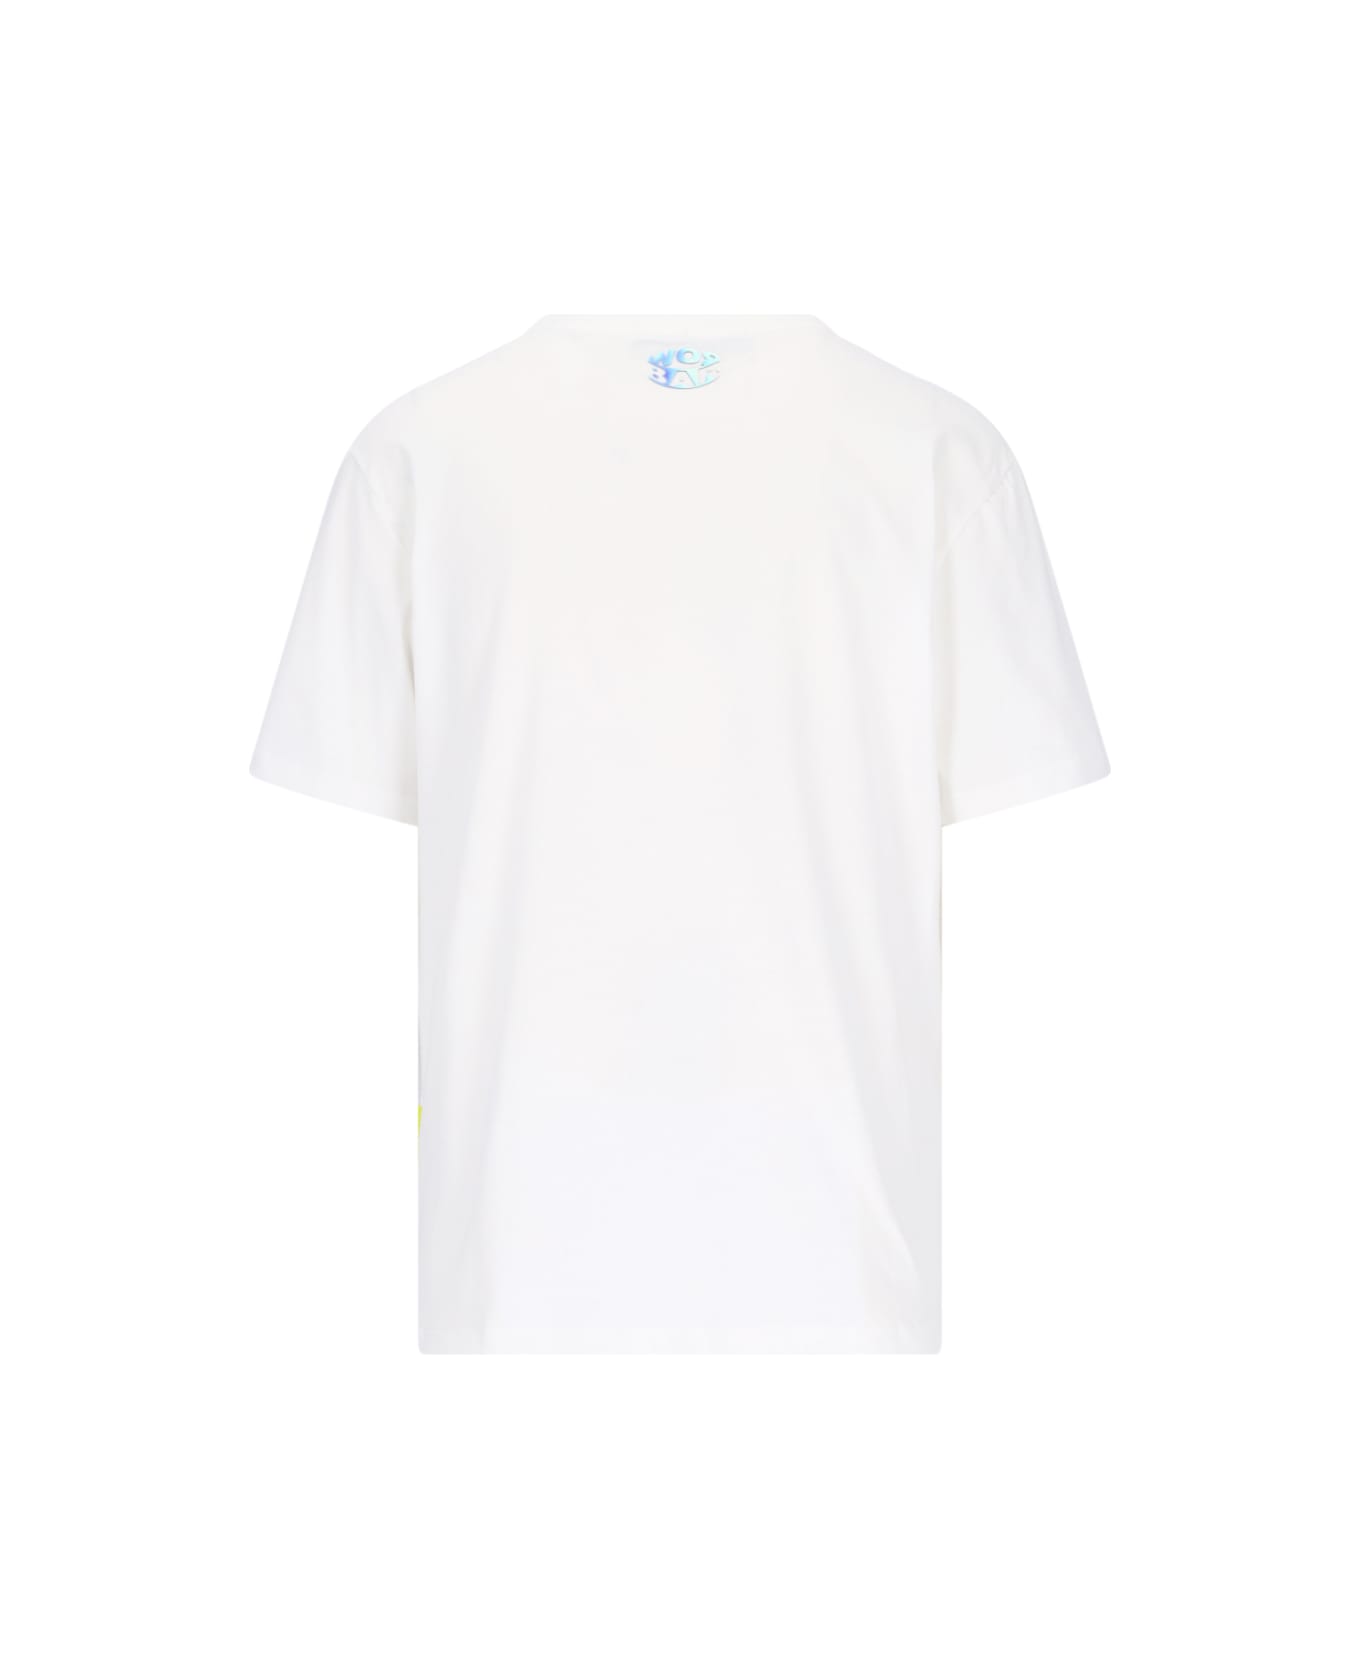 Barrow Logo T-shirt - White